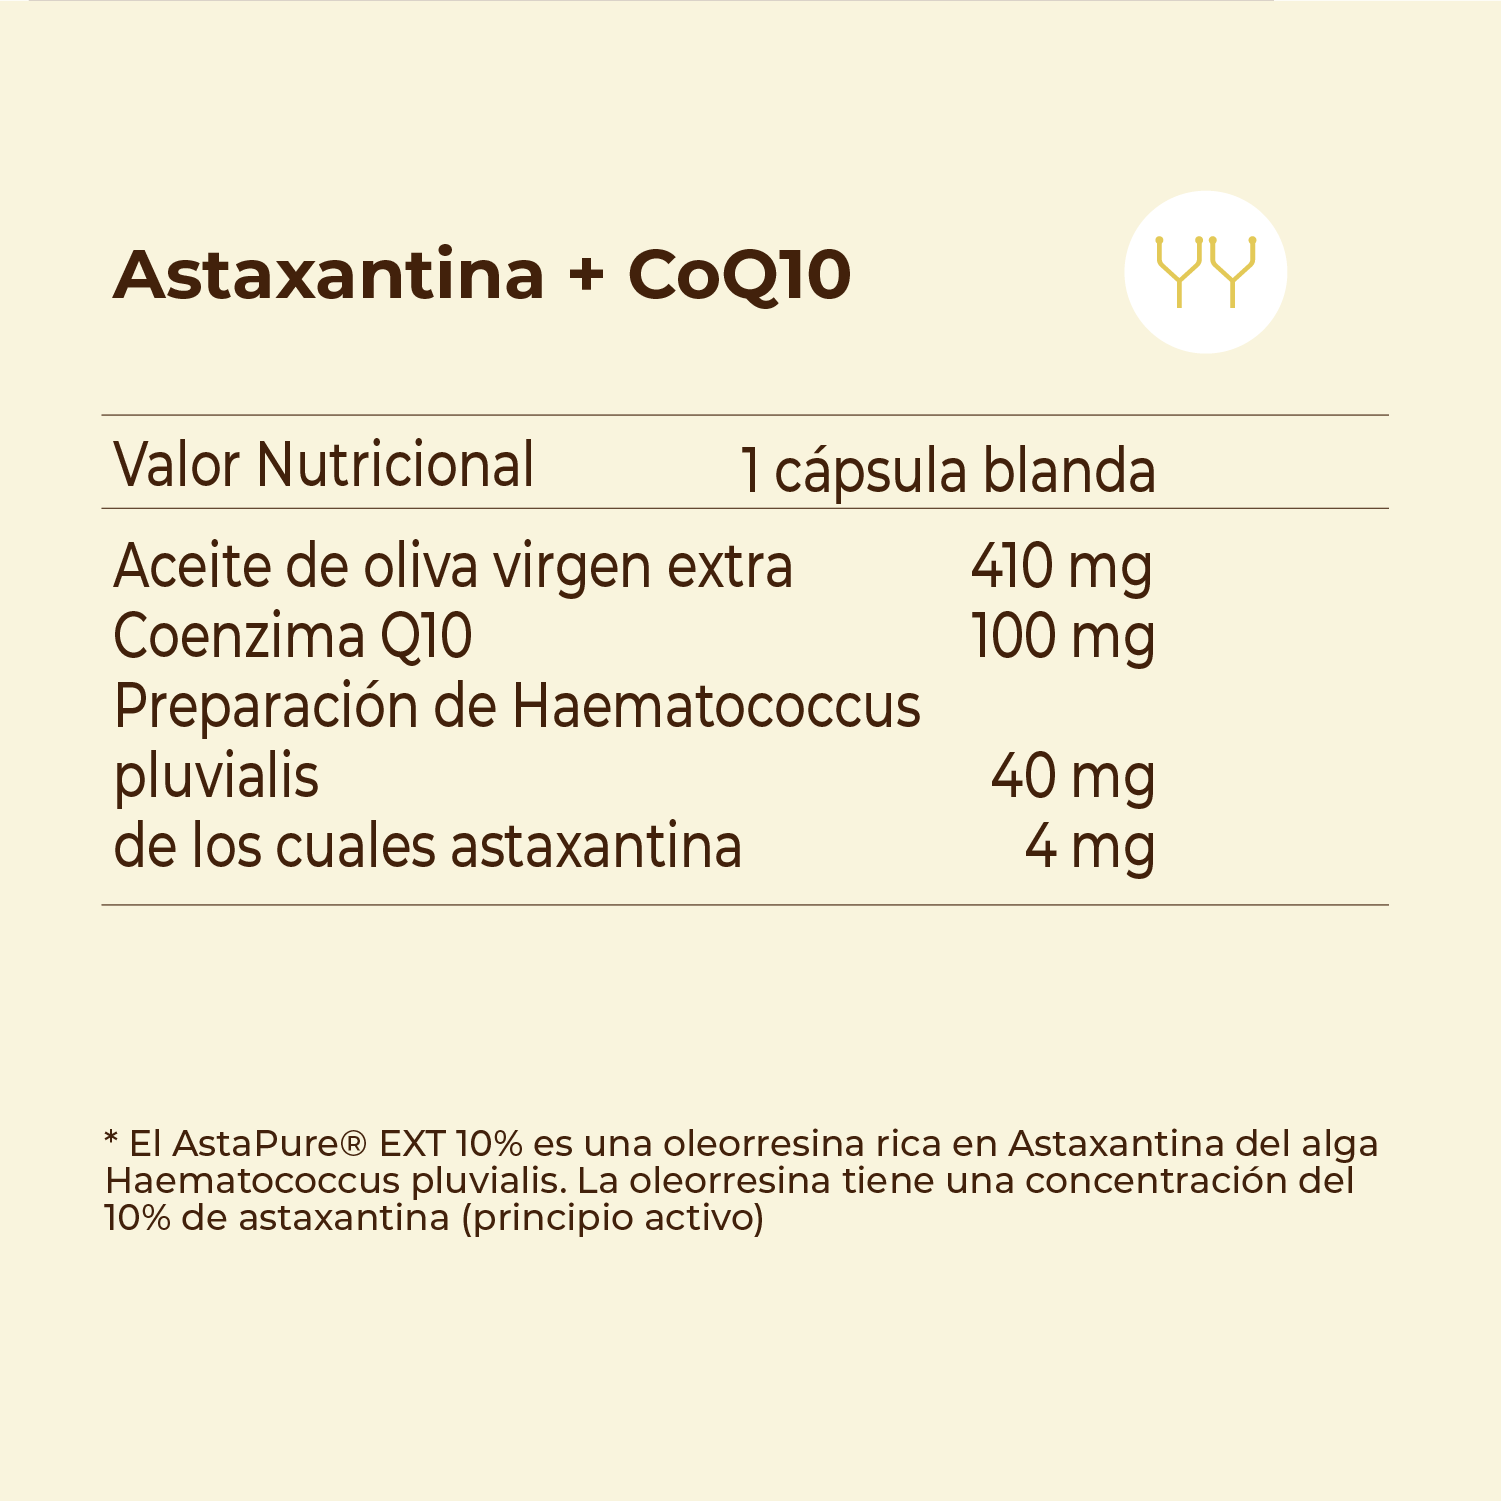 Astaxantina + CoQ10